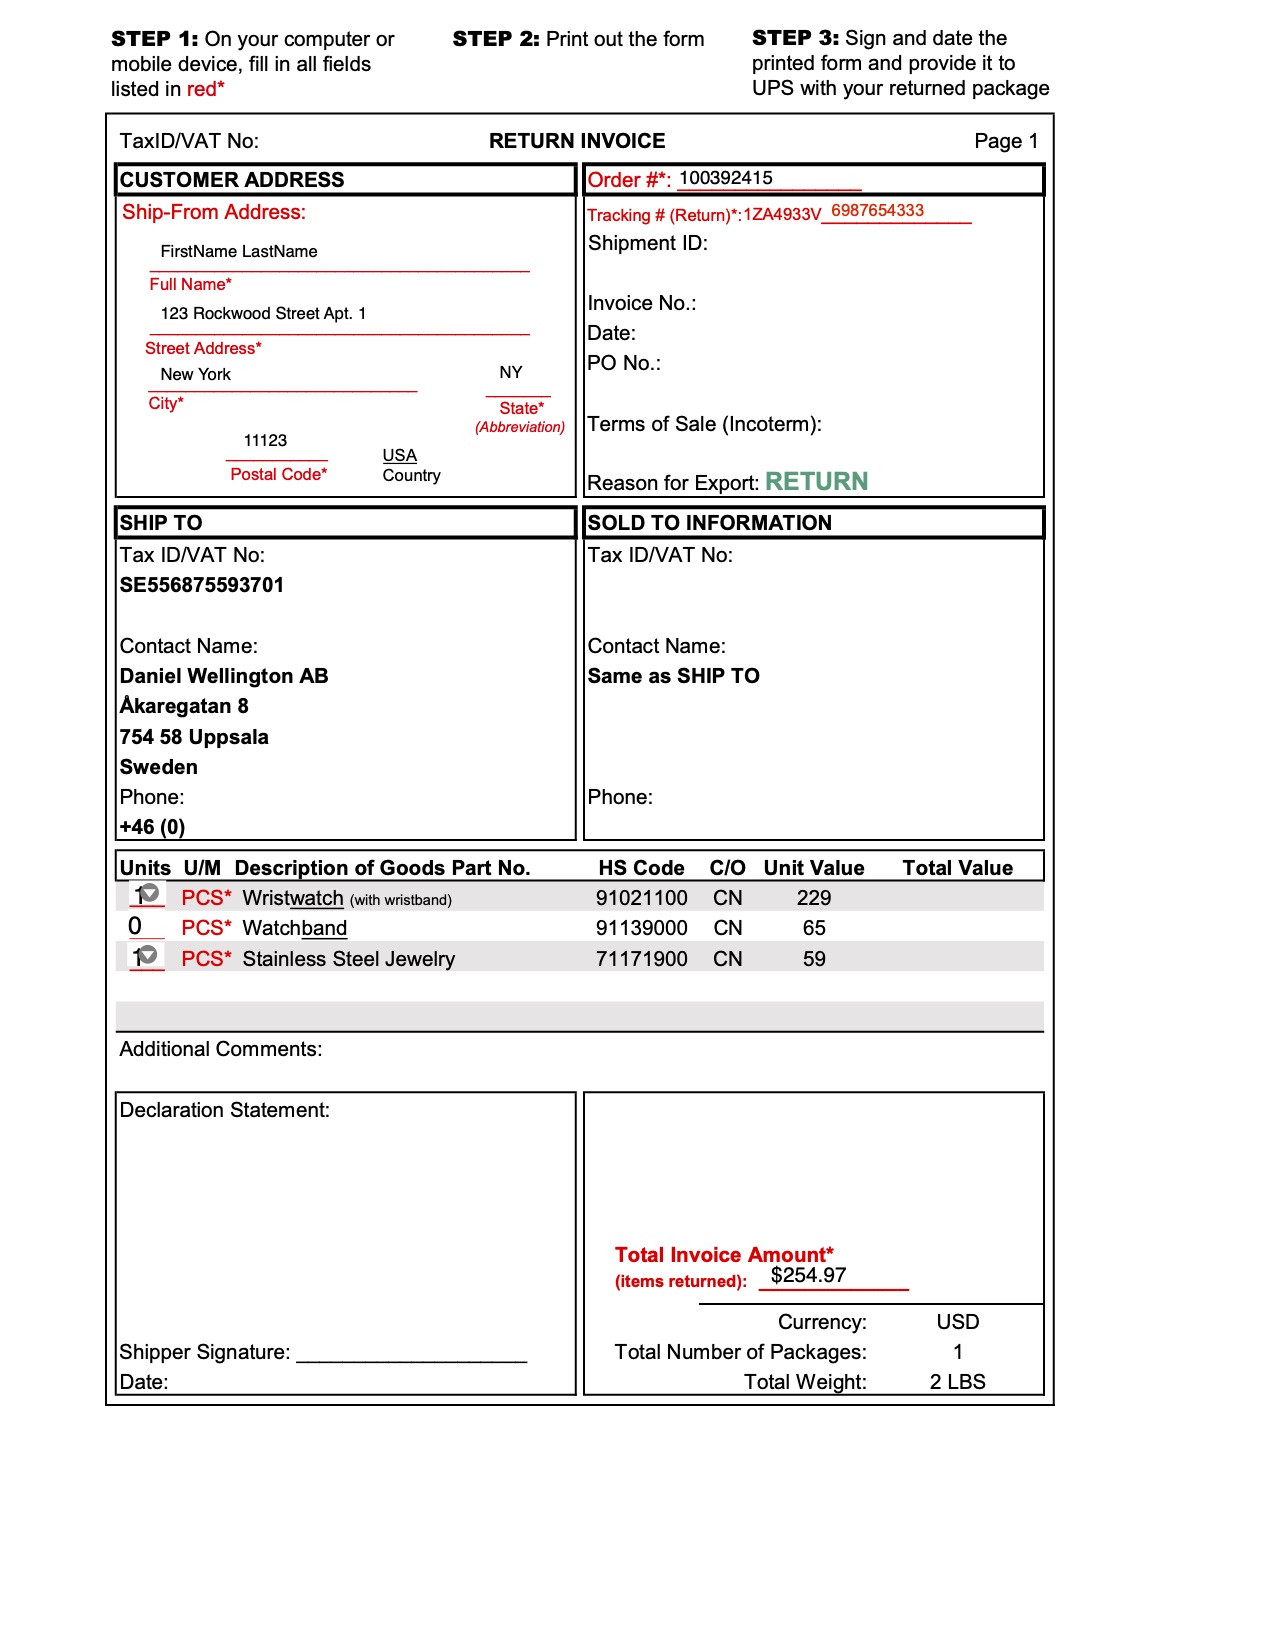 Ups customs invoice form